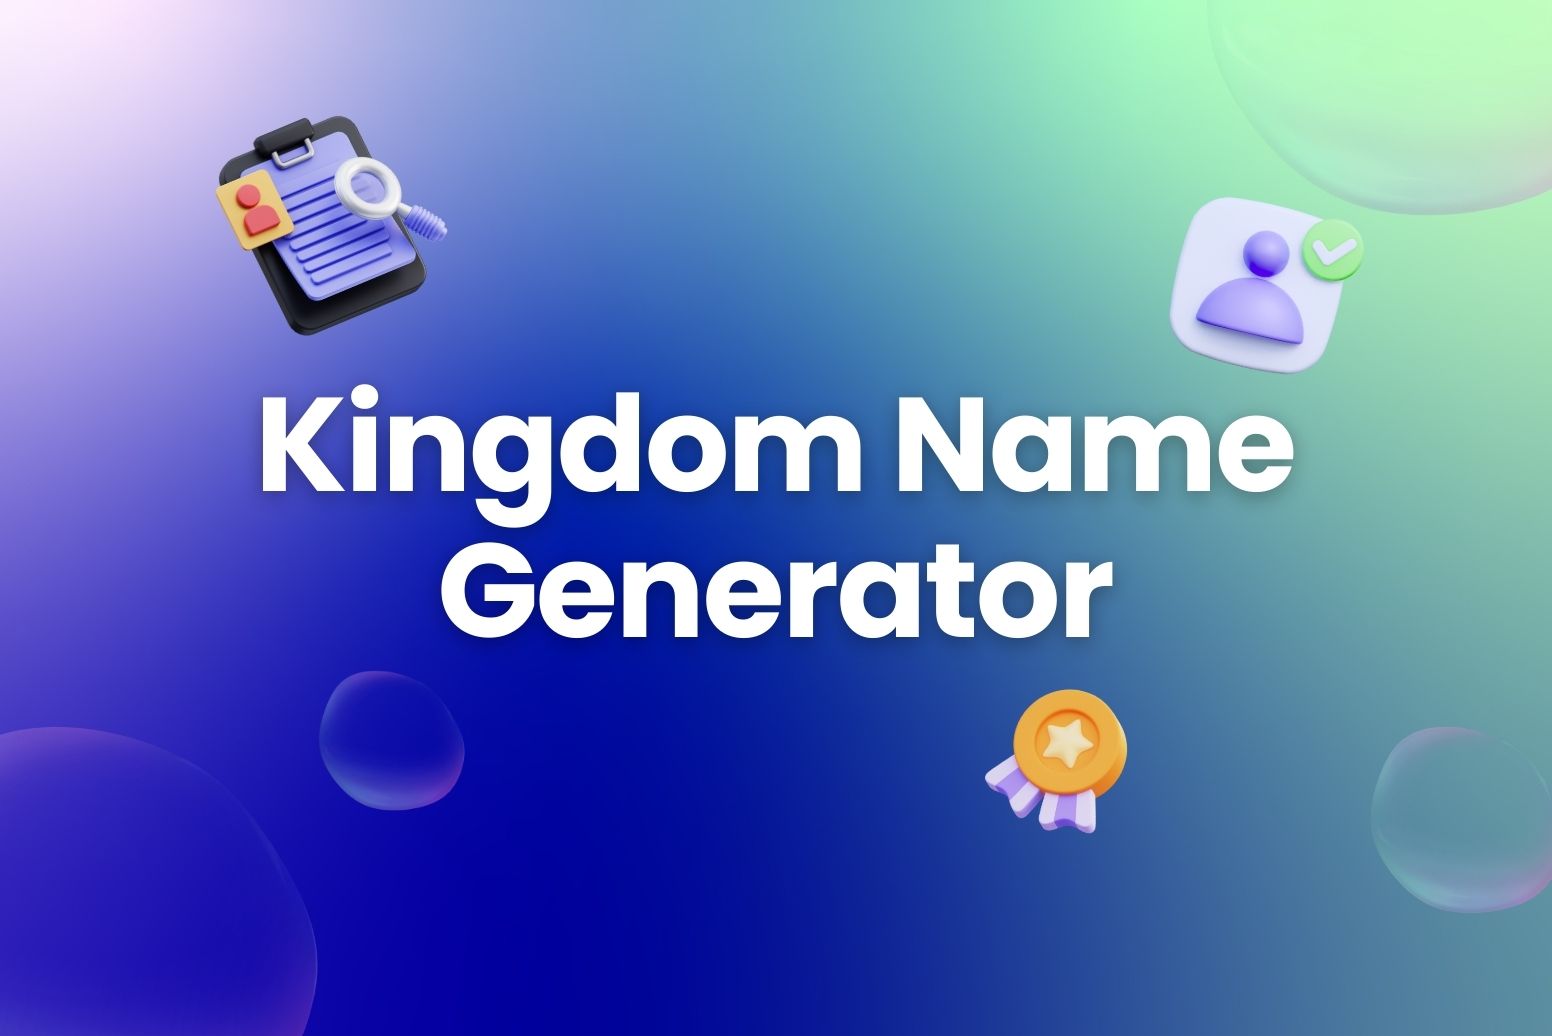 Kingdom Name Generator